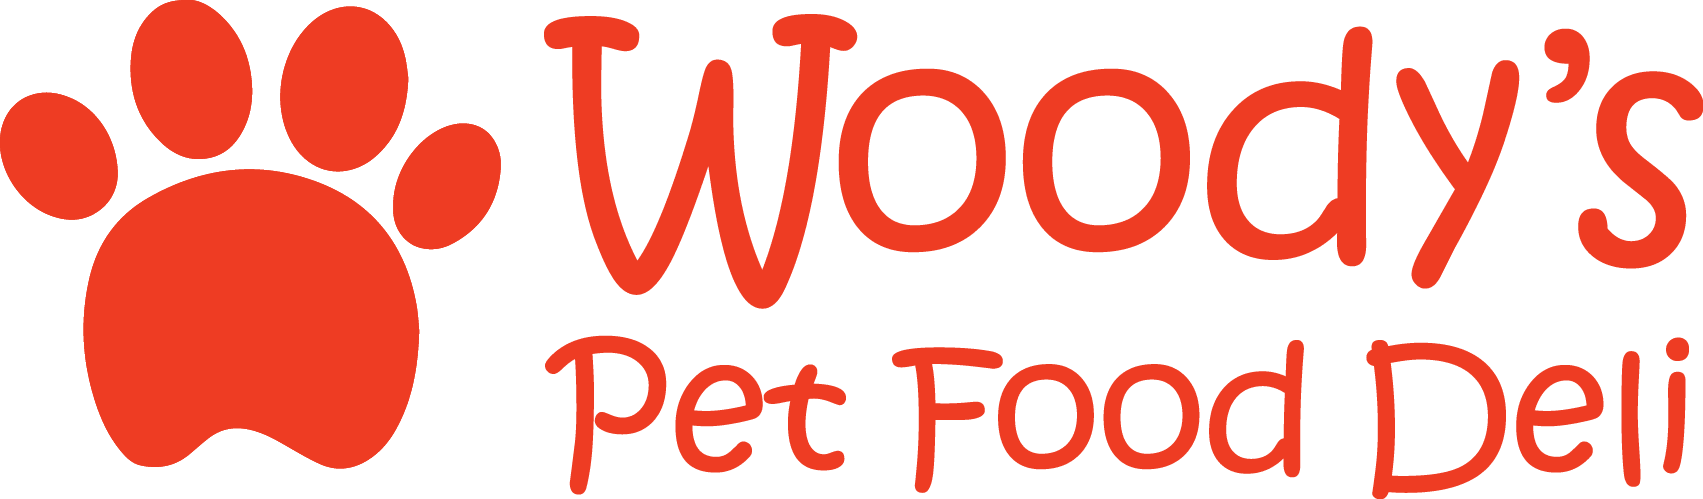 Woody's Pet Food Deli logo